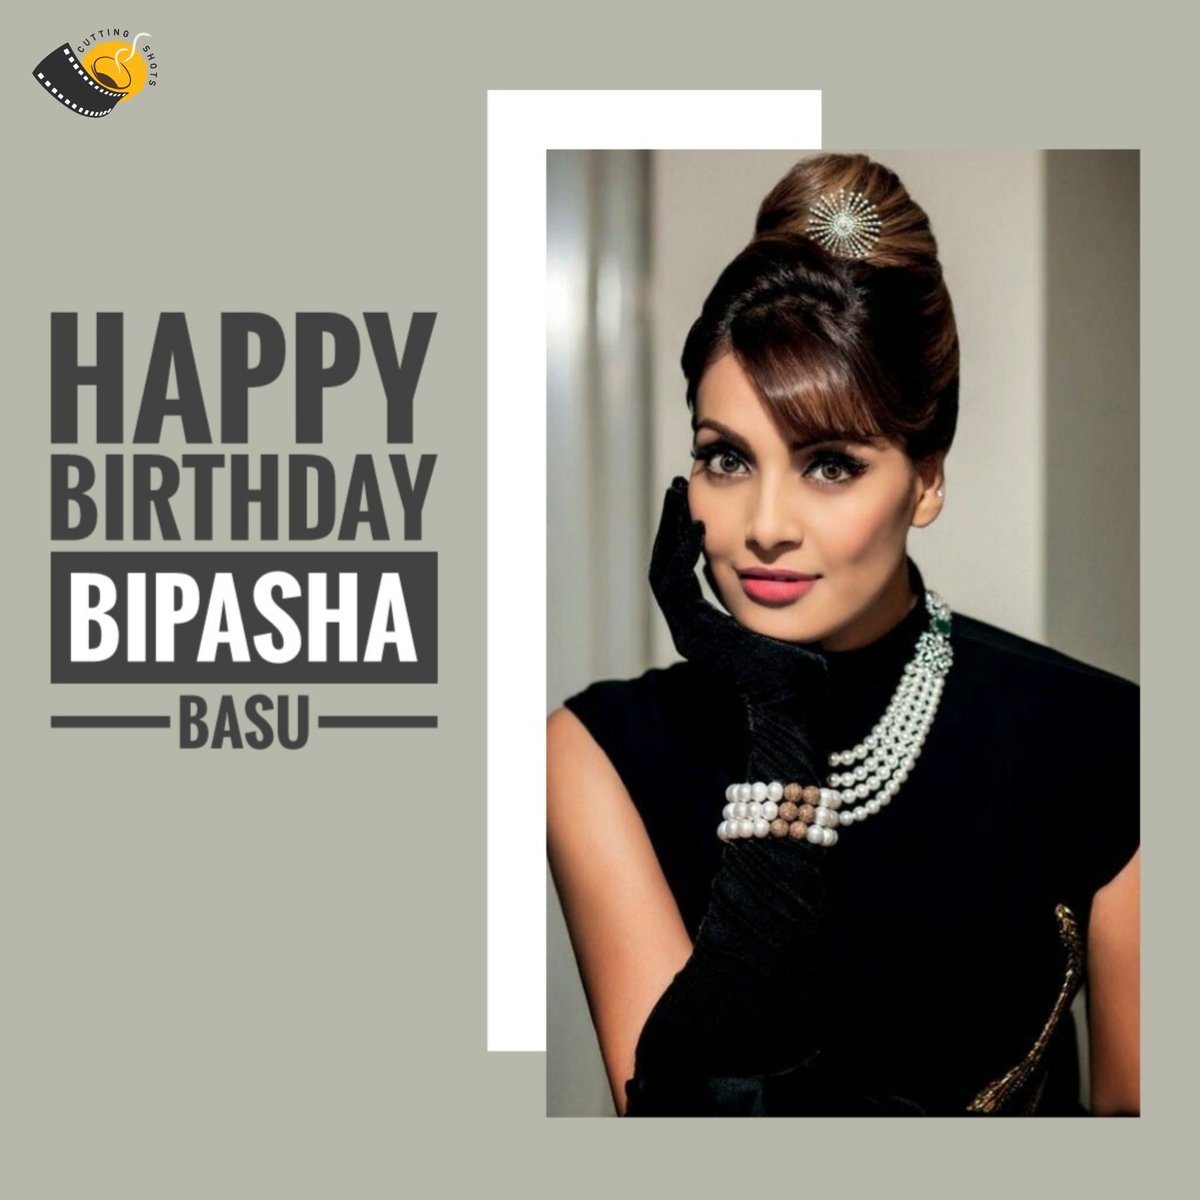 Team Cutting Shots wishes @bipsluvurself a very happy birthday!

#happybirthdaybipashabasu #bipashabasu #bollywood #cuttingshots